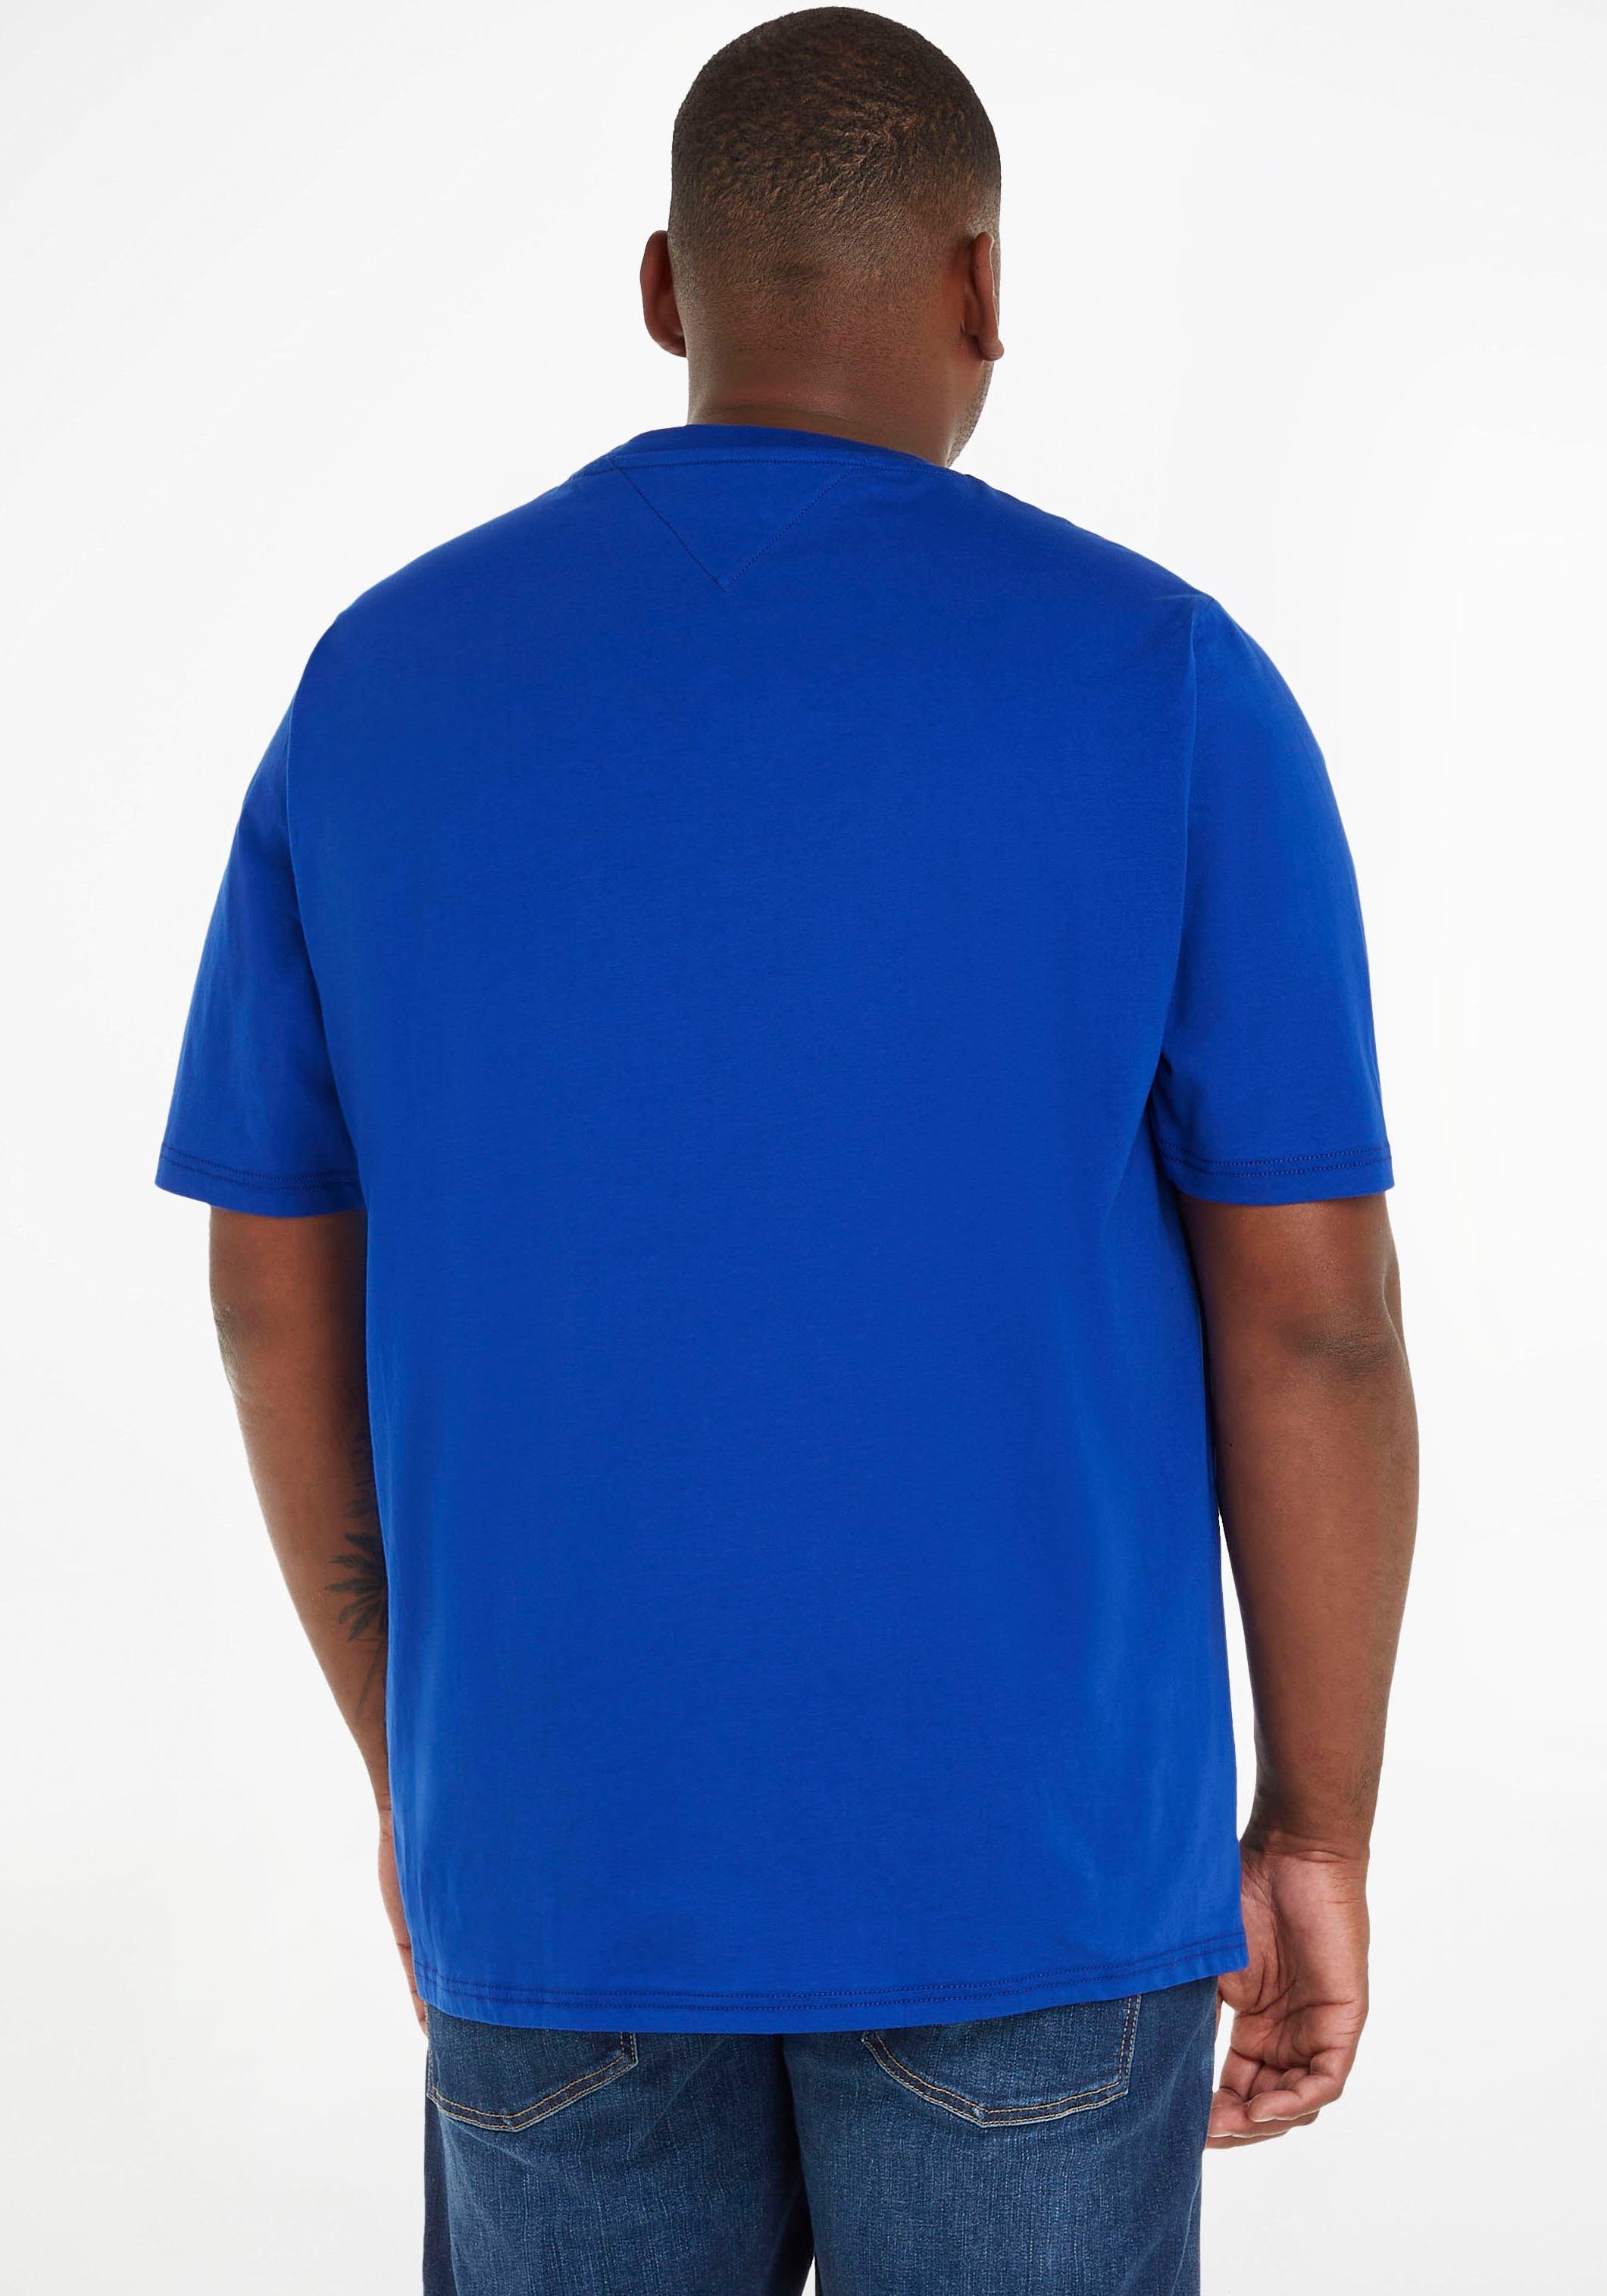 Tommy Jeans der TJM auf mit Brust PLUS Ultra ESSENTIAL Print T-Shirt Blue GRAPHIC Plus TEE